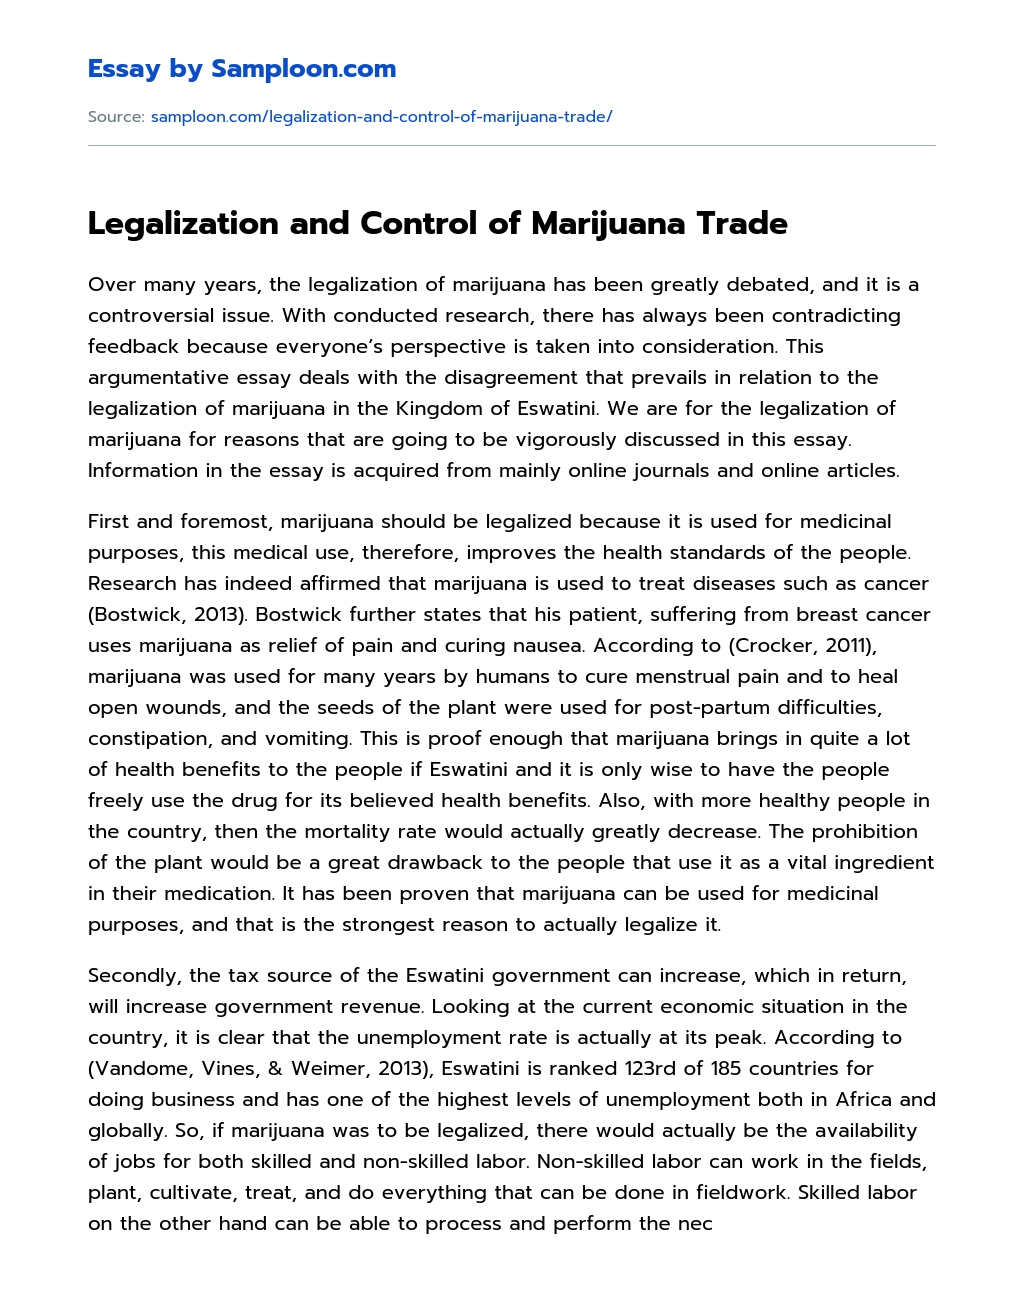 Legalization and Control of Marijuana Trade essay